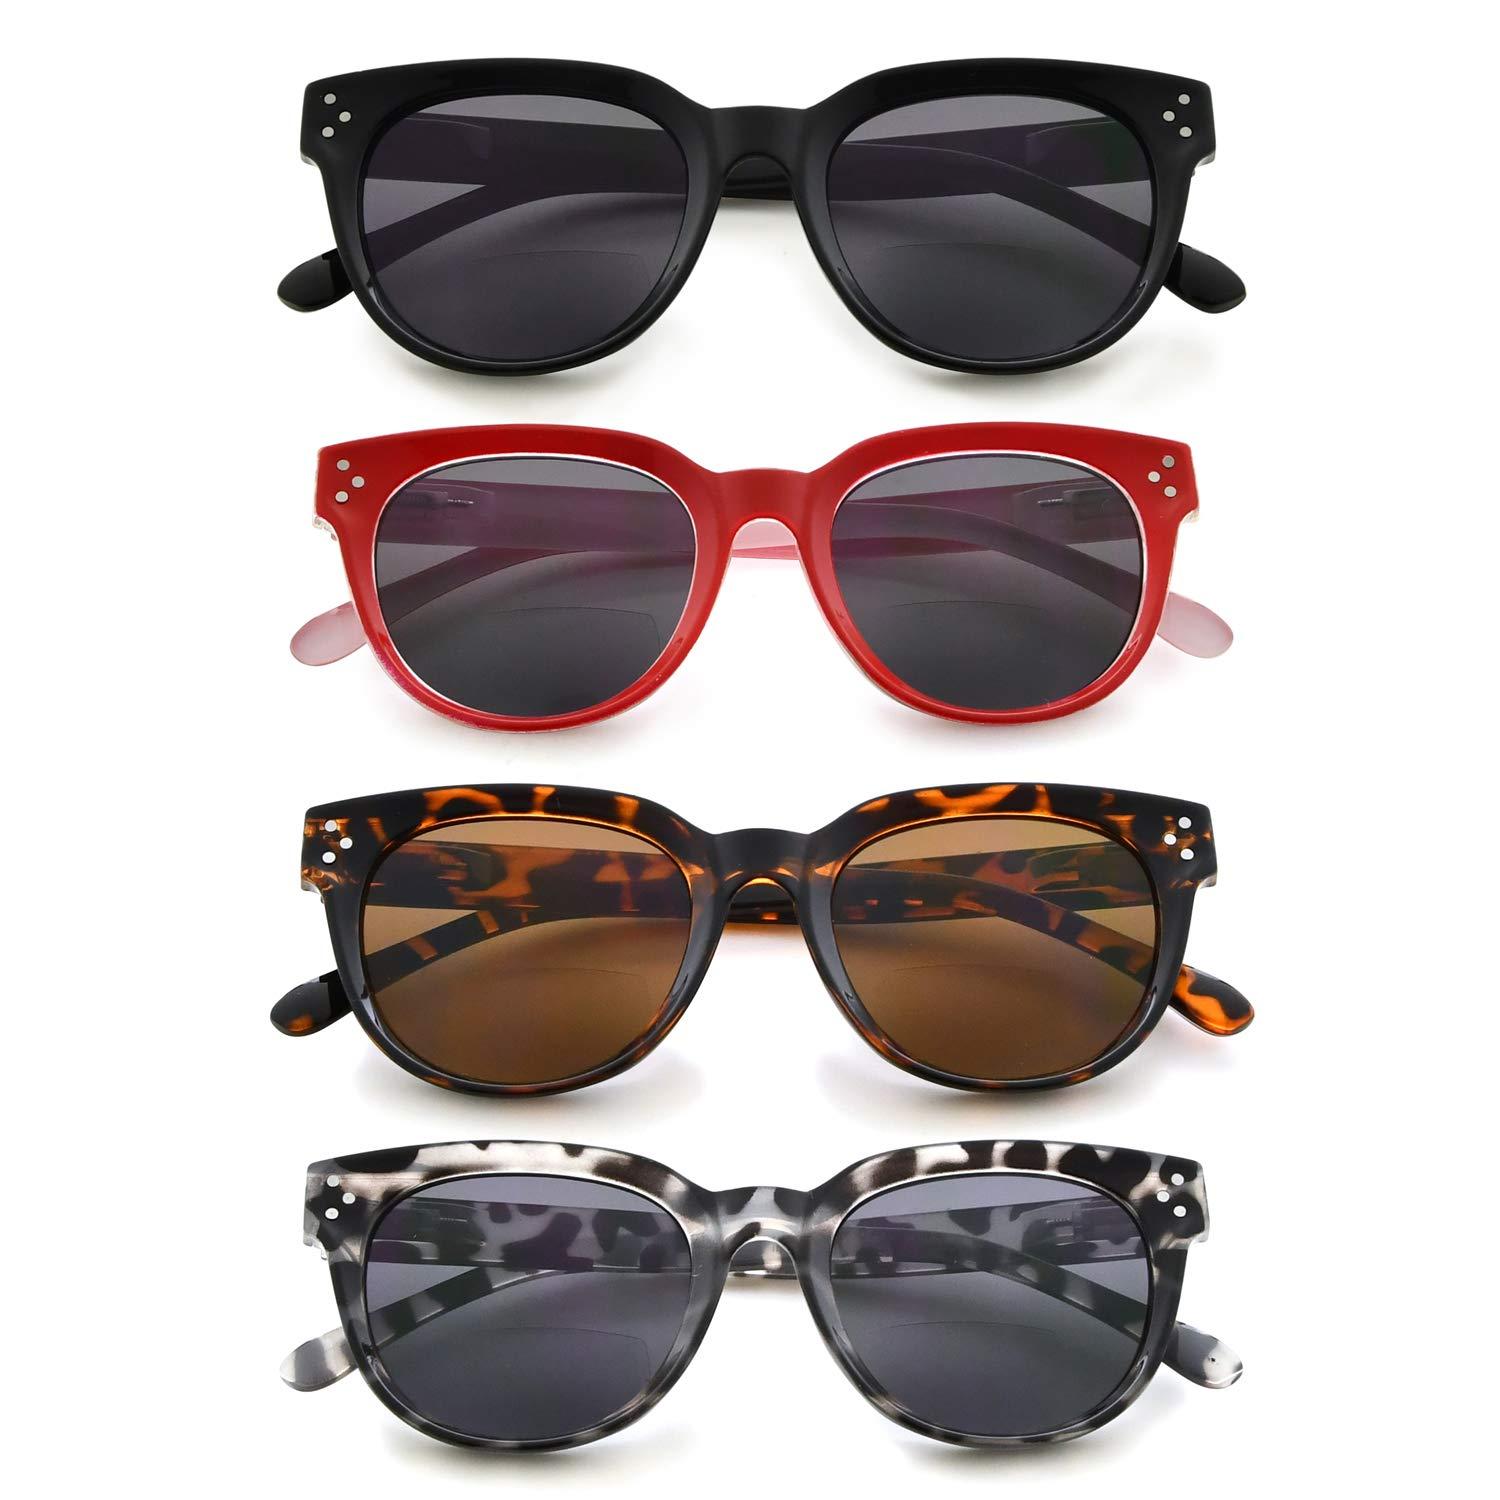 Eyekepper 4-packing Bifocal Glasses for Women Reading under the Sun Stylish Bifocal Readers Tinted Lens +2.00 1